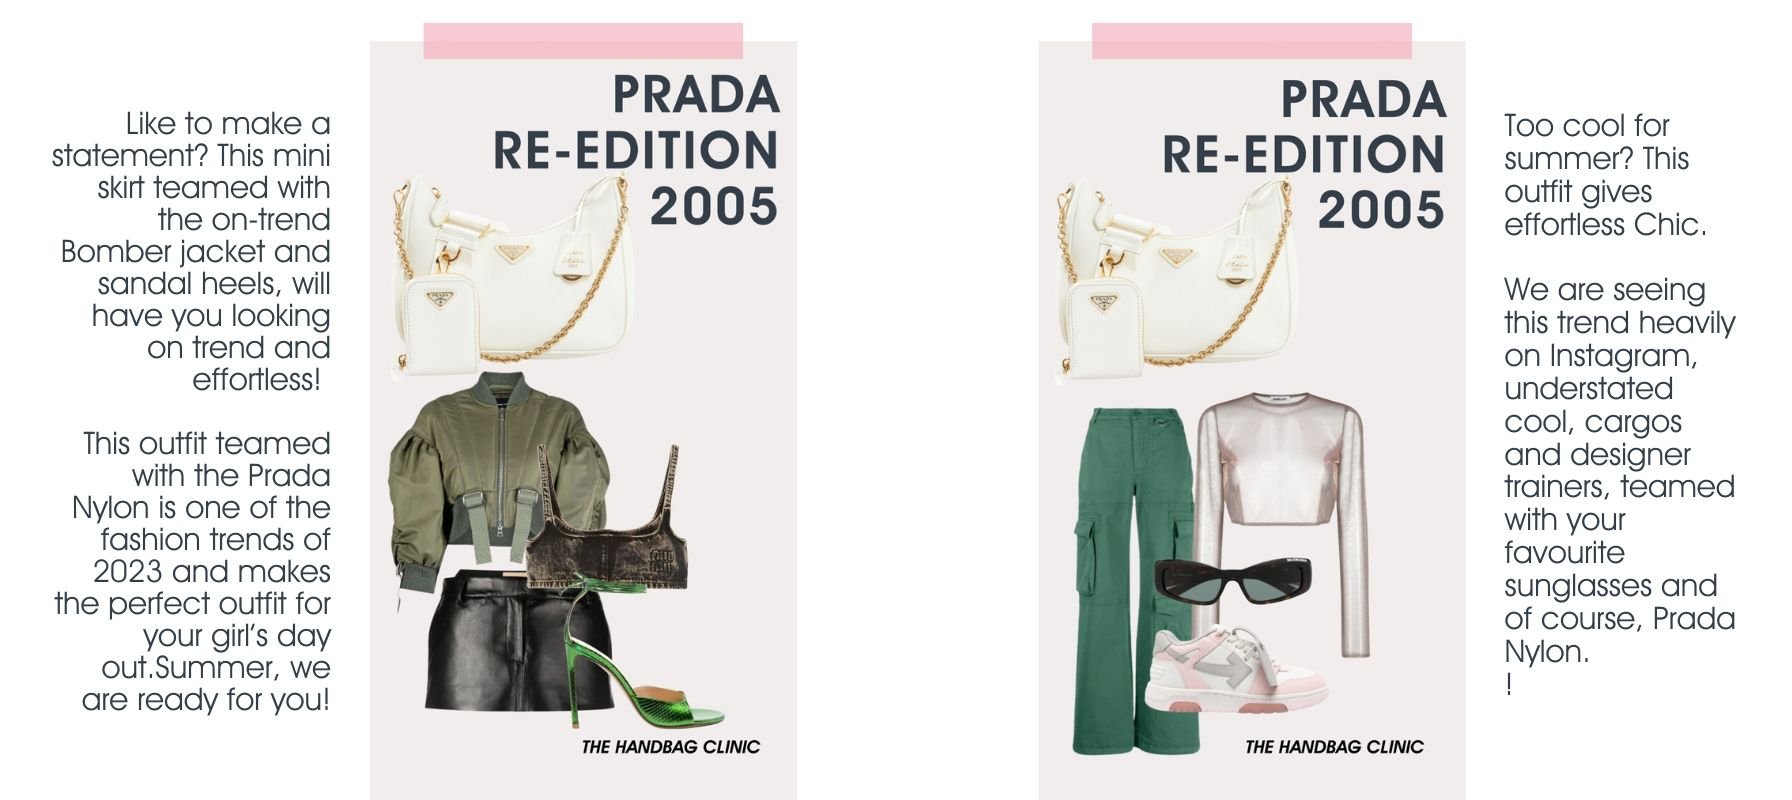 Shop the Prada Reedition today at The Handbag Clinic